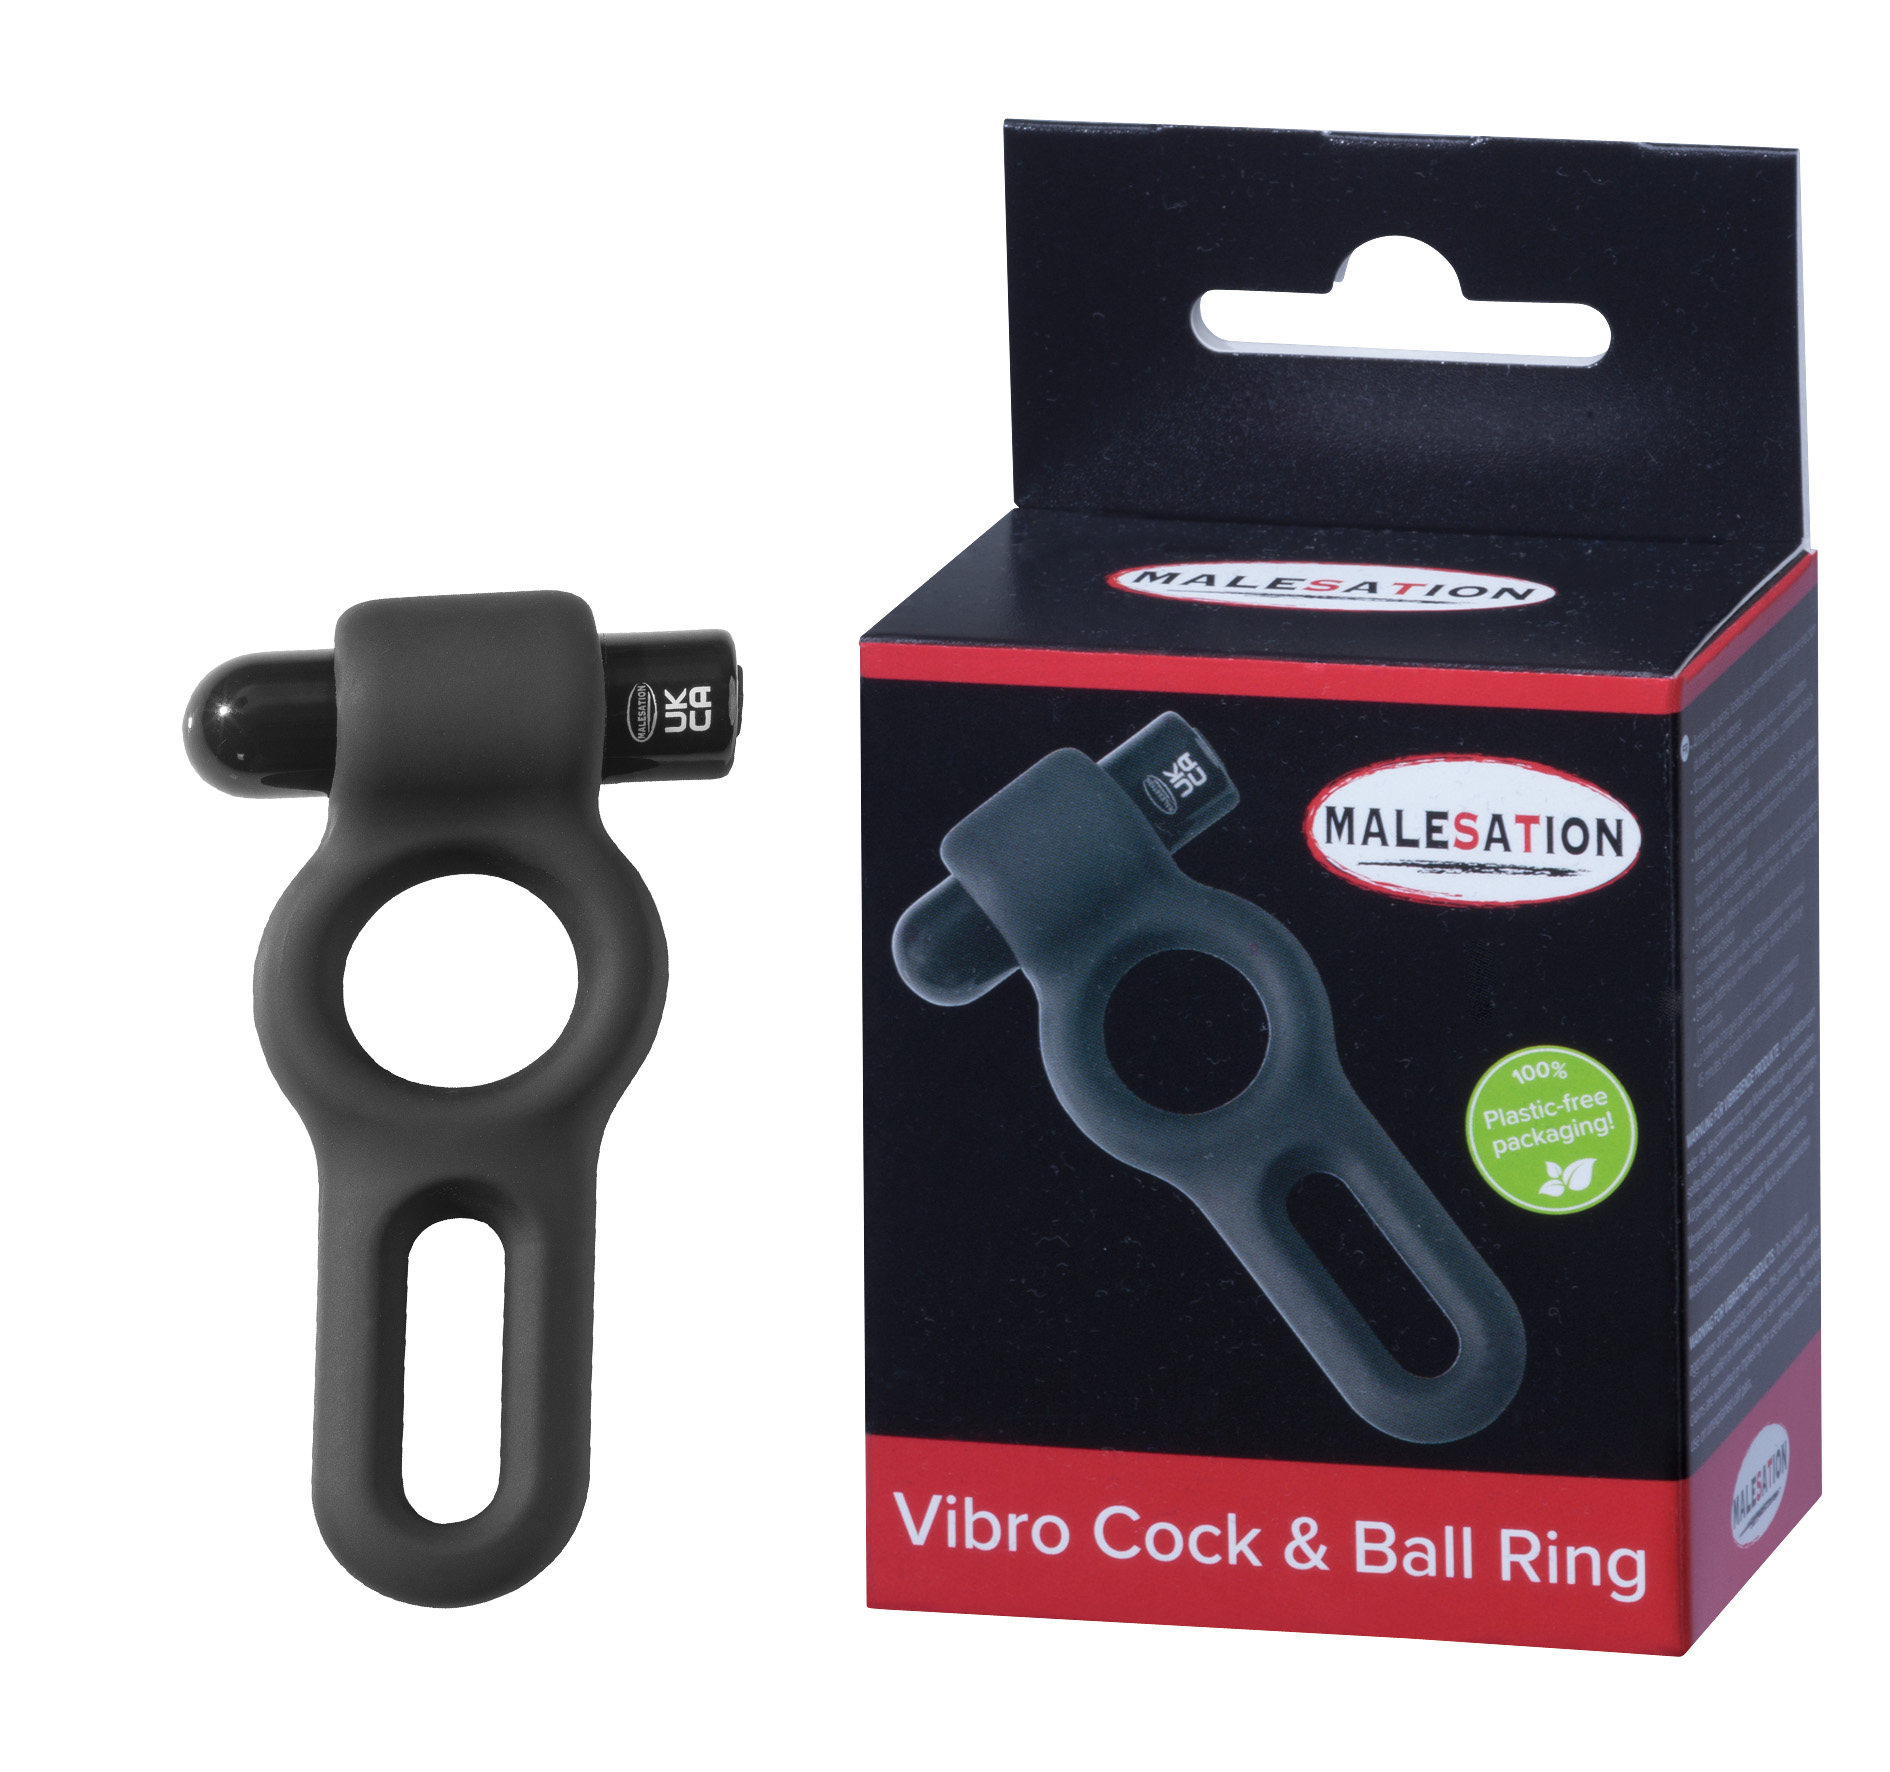 MALESATION Vibro Cock & Ball Ring